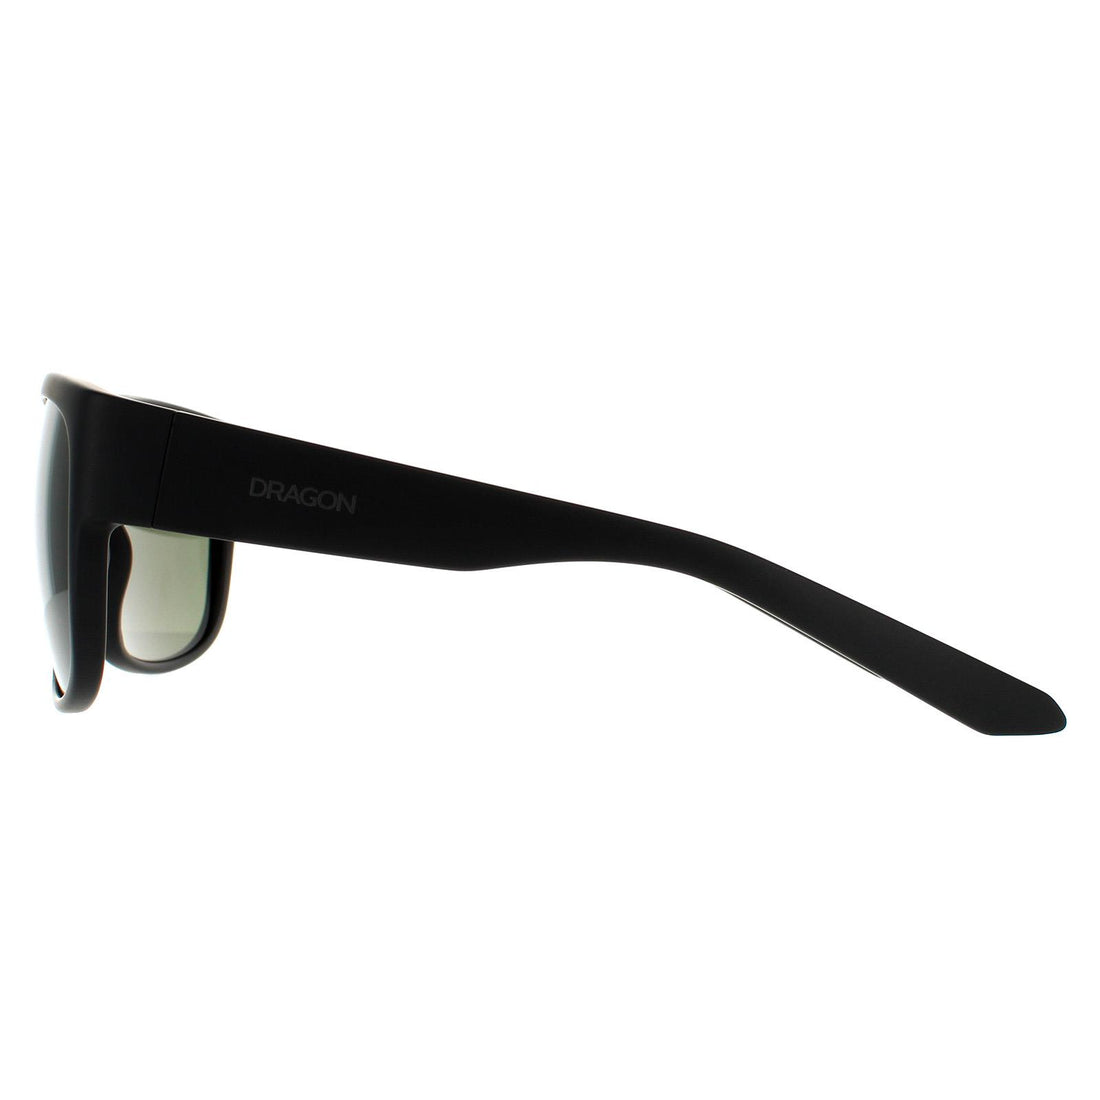 Dragon Sunglasses Rune 40725-003 Matte Black G15 Green